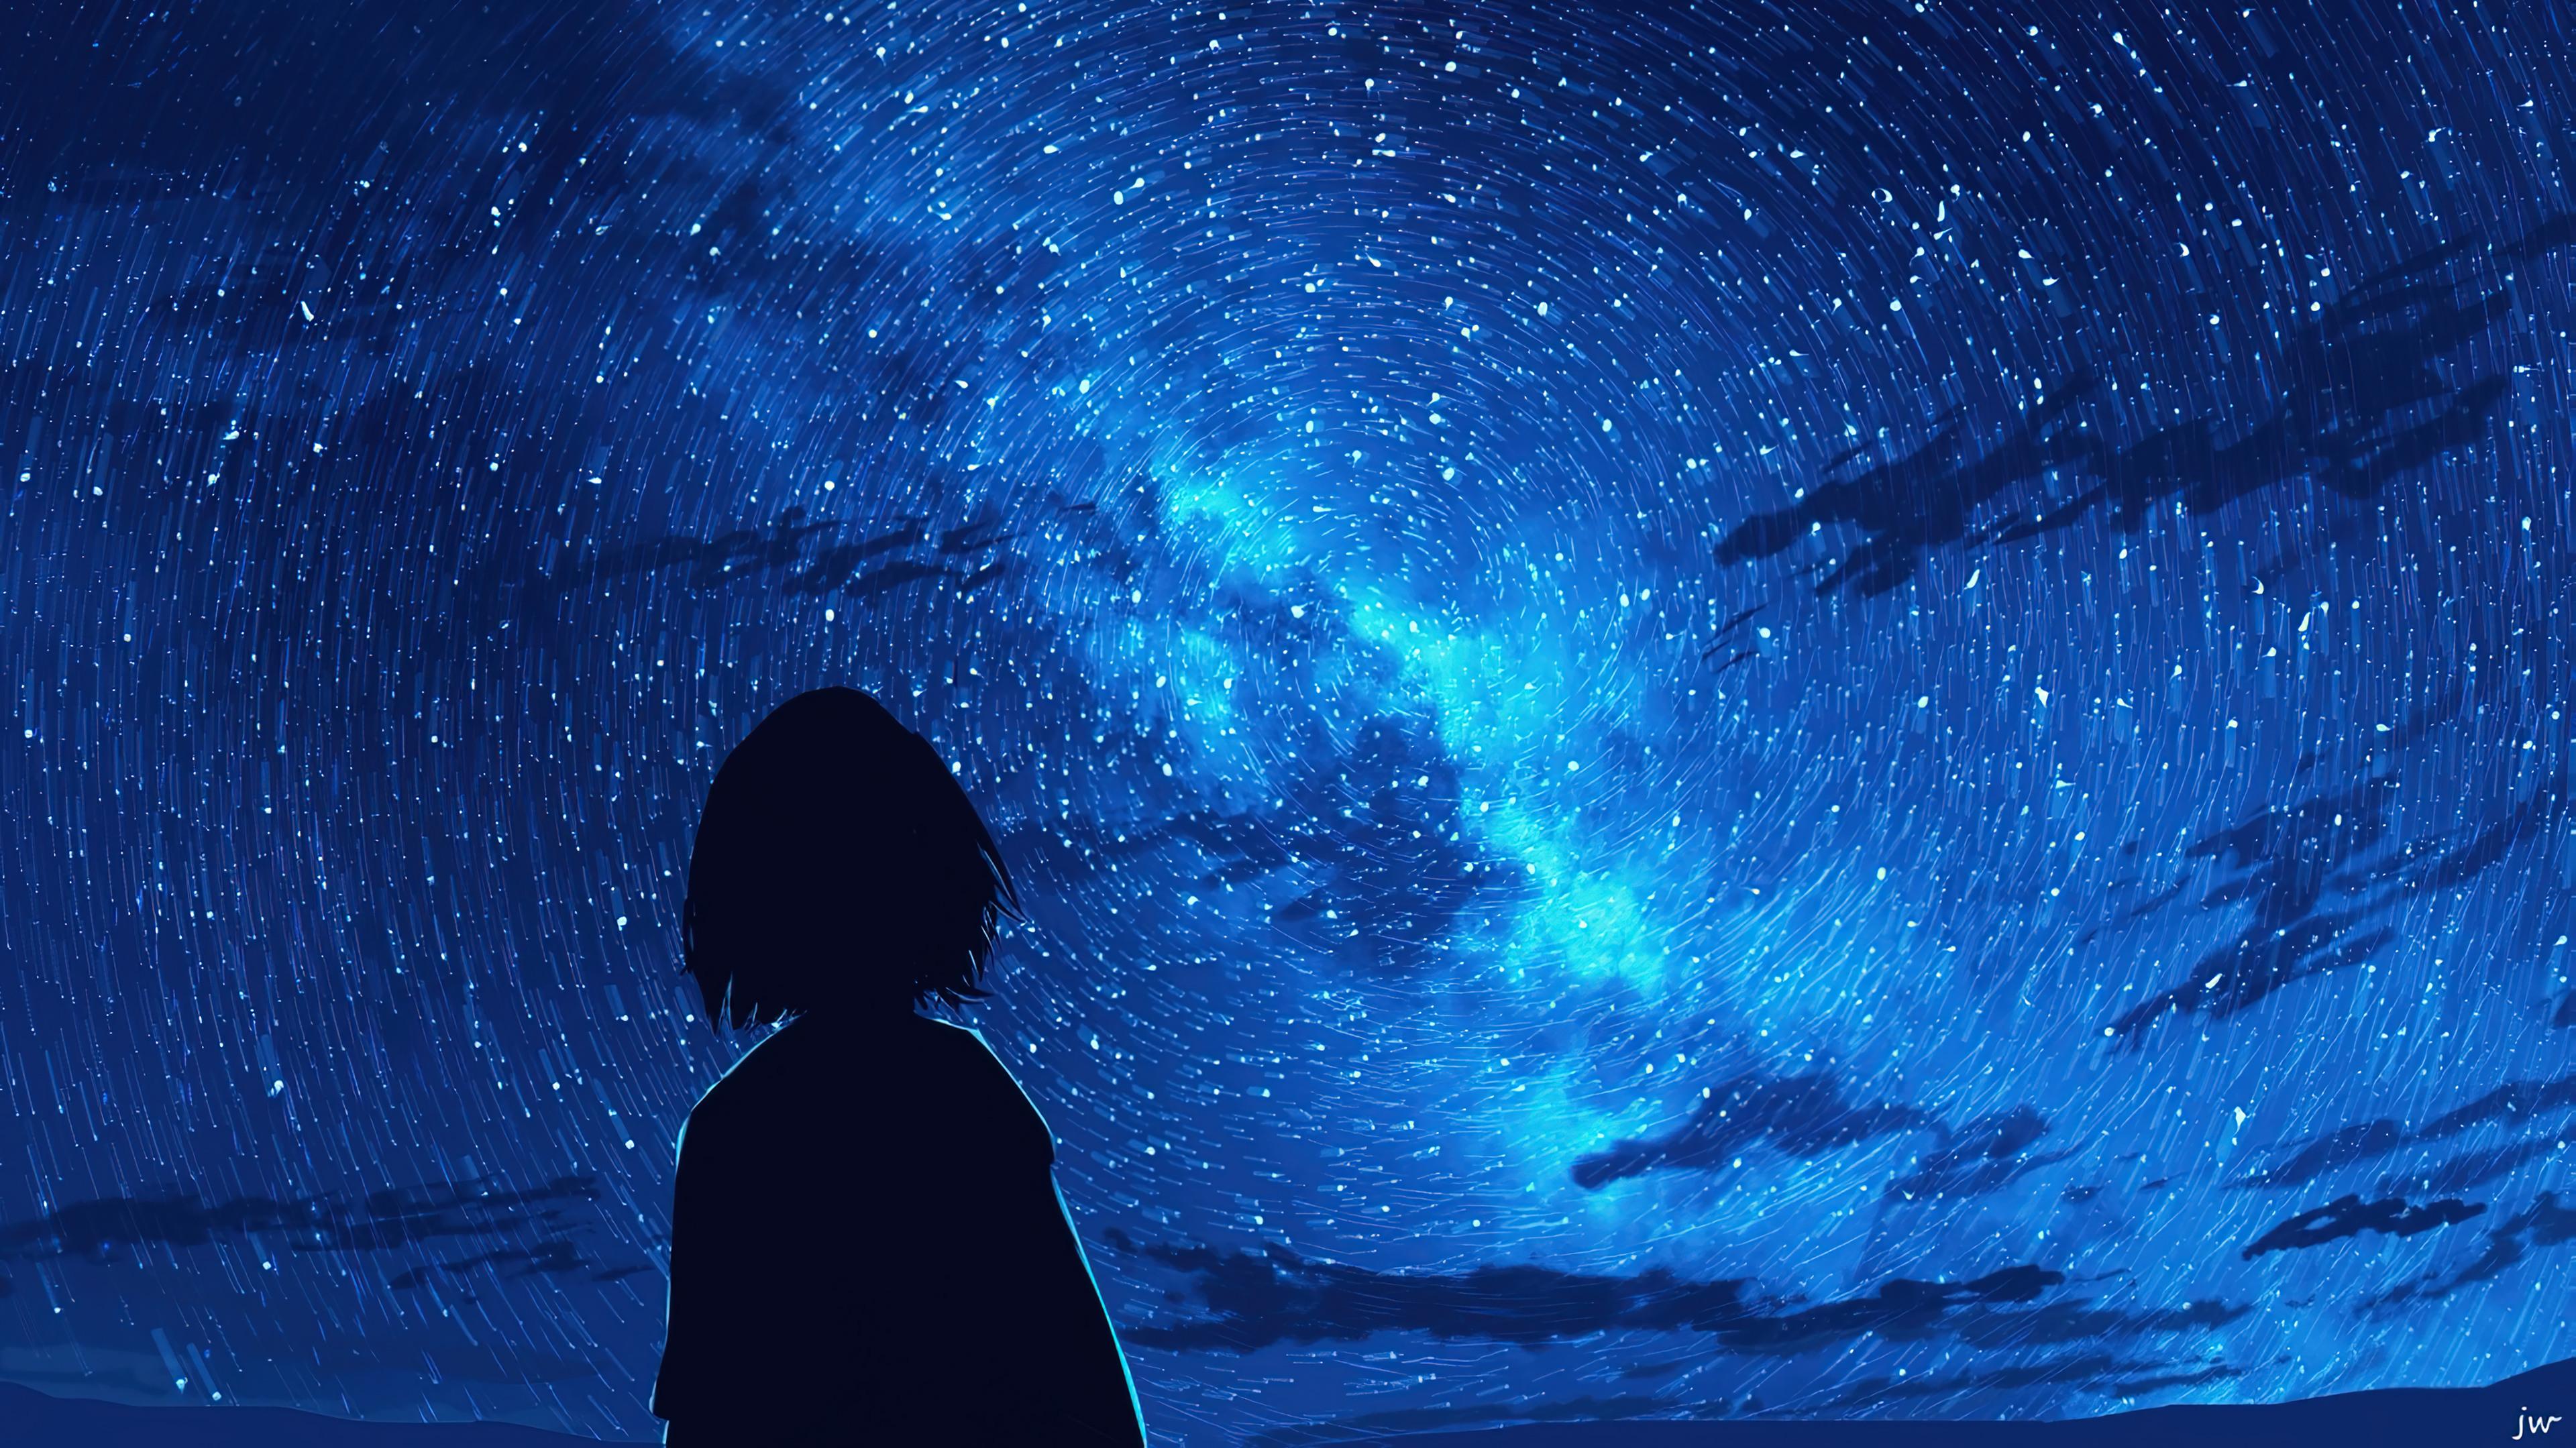 Starry Night Sky Anime Girl Silhouette Wallpaper 4K HD PC 6200f